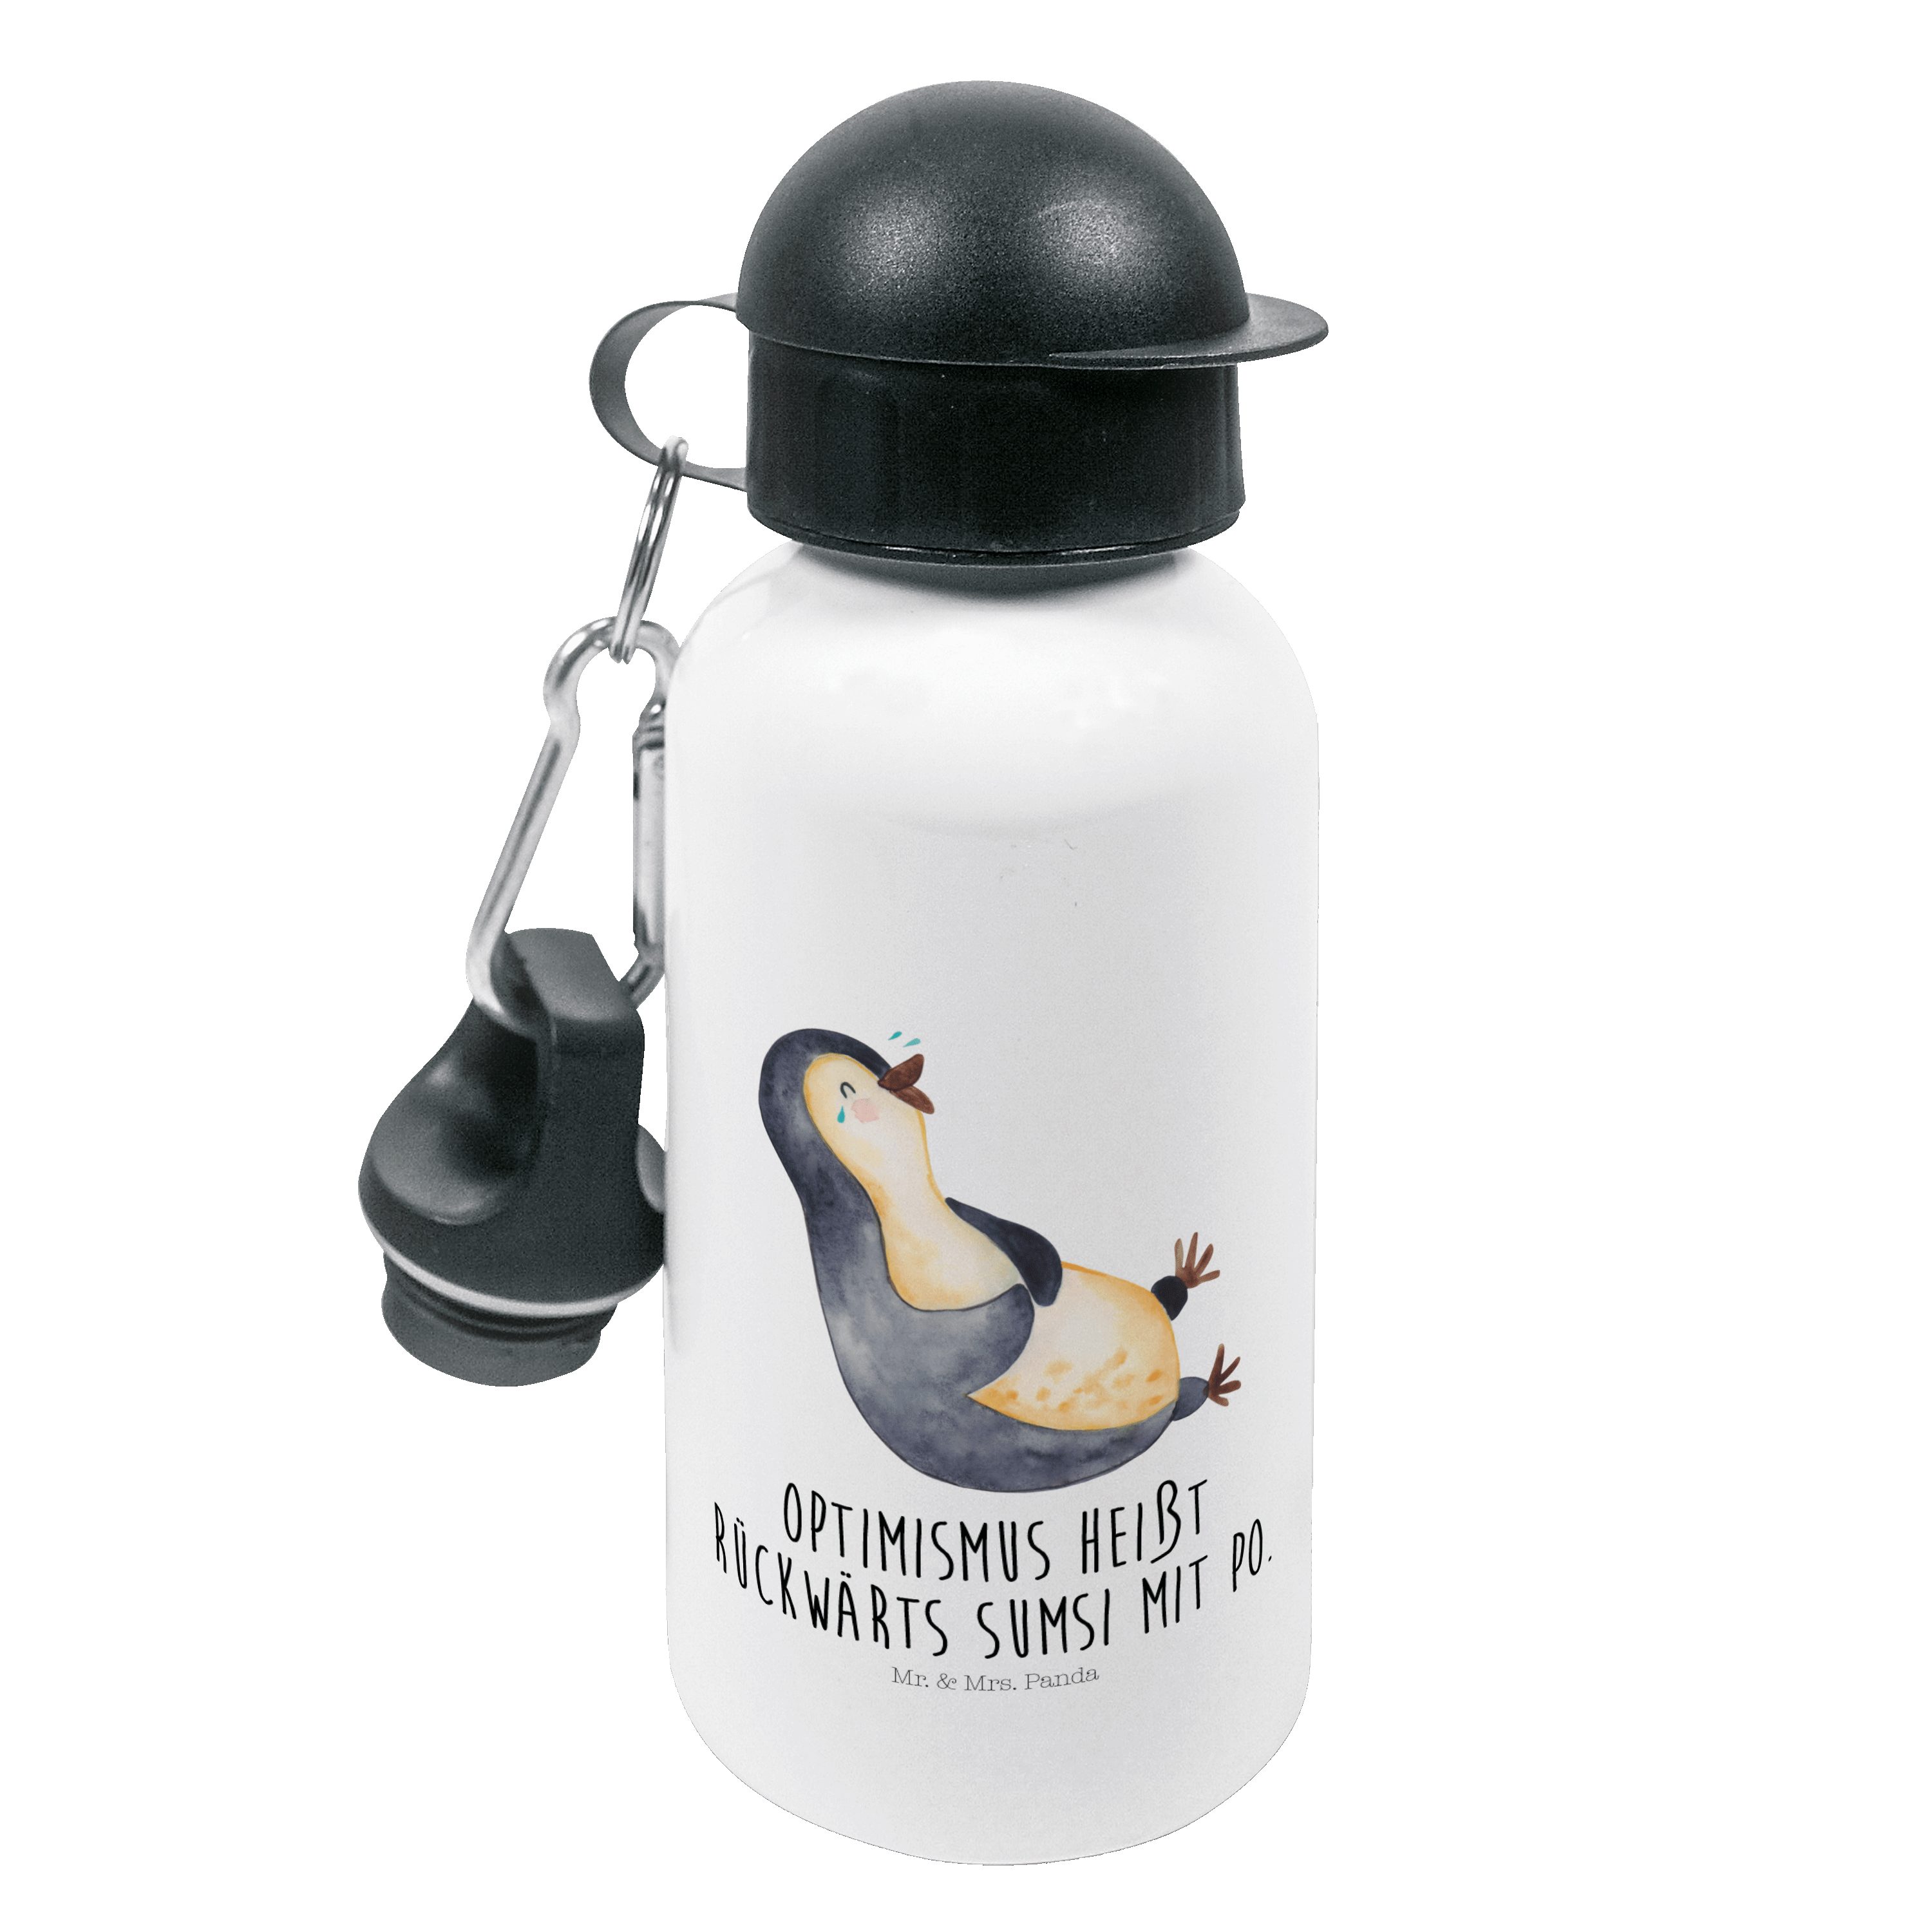 Mr. & Mrs. Panda Trinkflasche Pinguin lachend - Weiß - Geschenk, Flasche, Kindertrinkflasche, Kinde